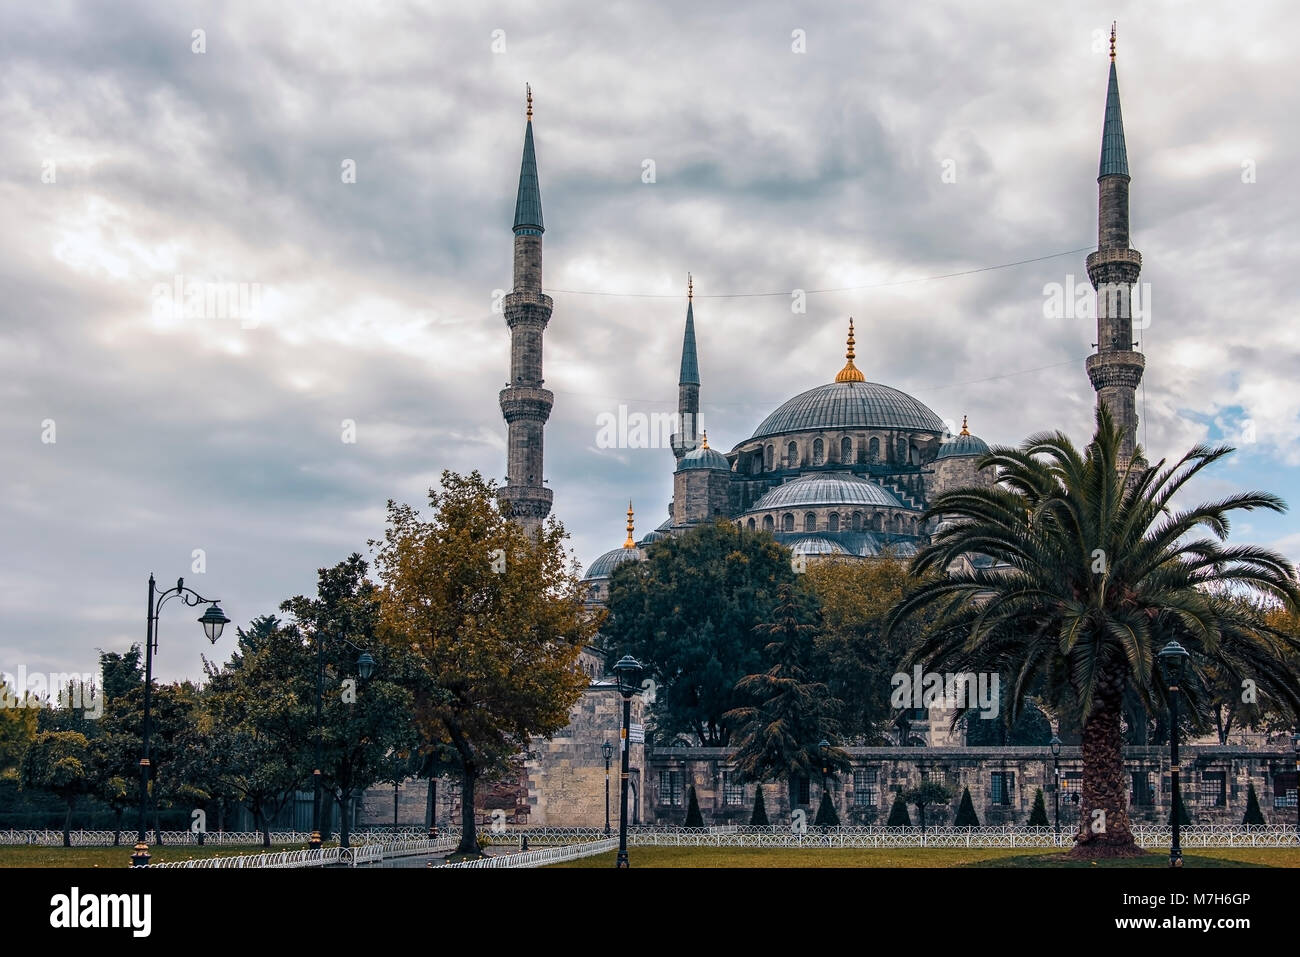 Sultan ahmet mosque in Istanbul, Turkey Stock Photo